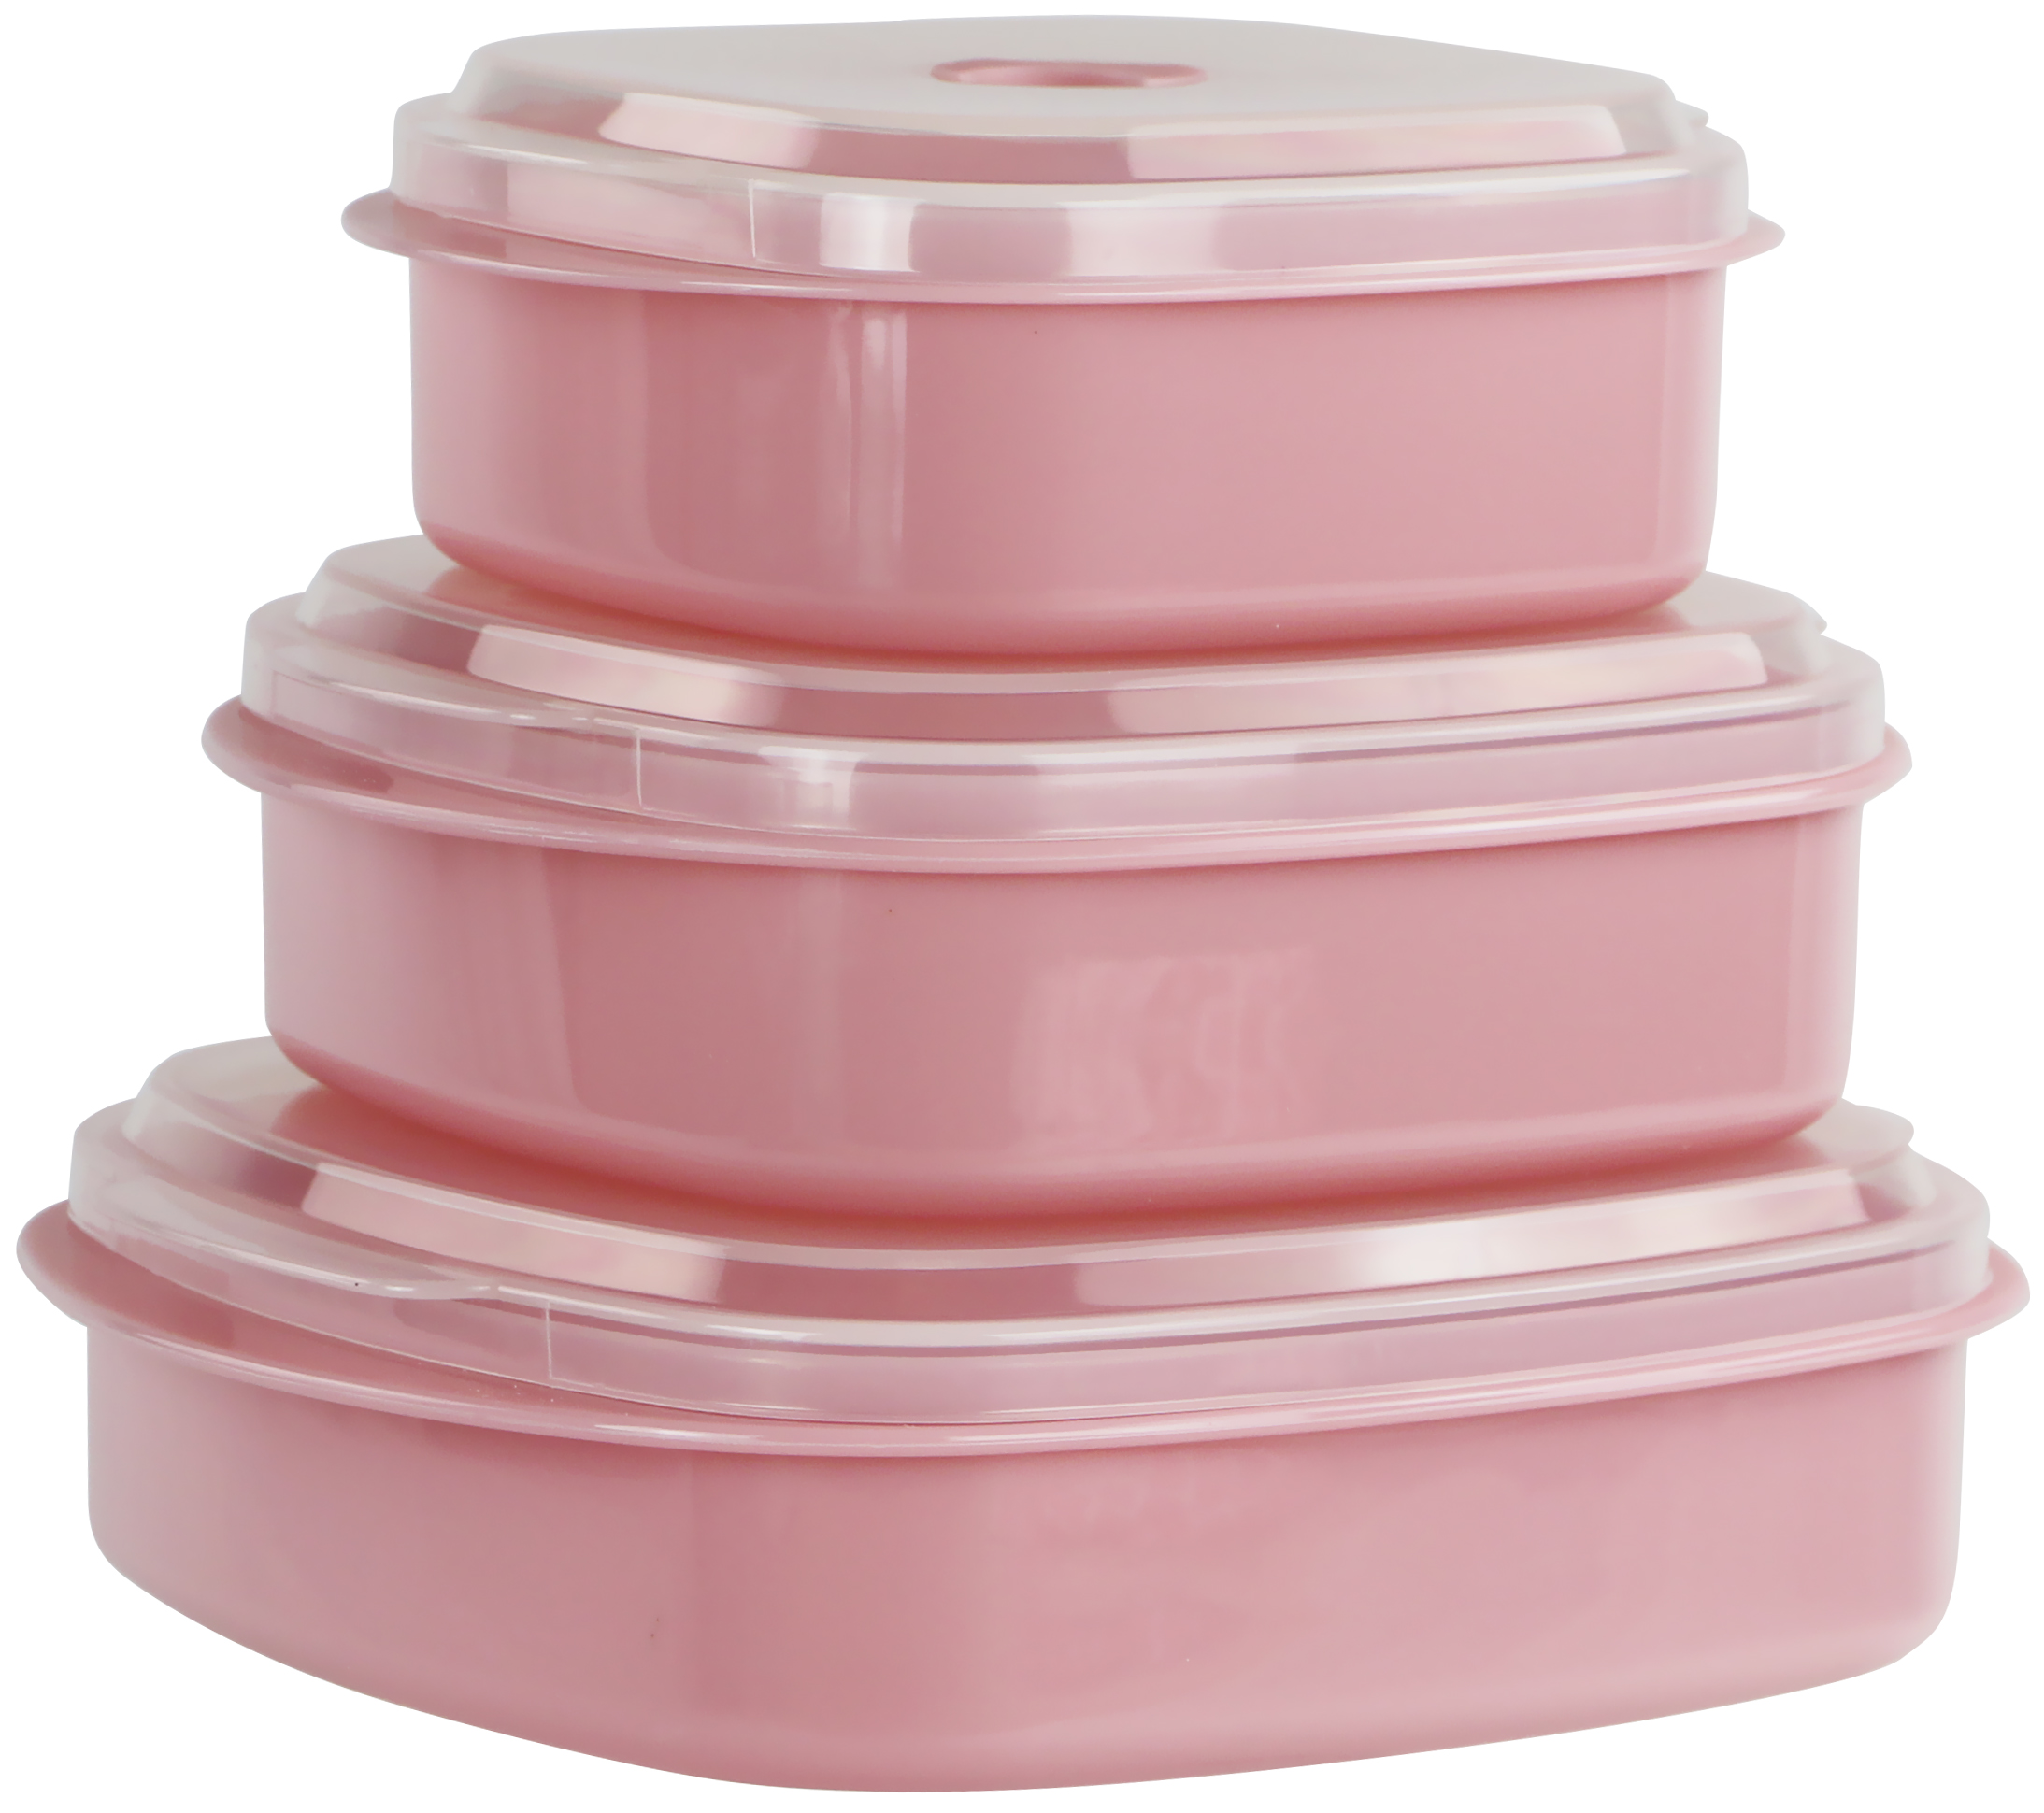 Calypso Basics, Microwave Cookware/ Storage Set, Pink - image 1 of 4